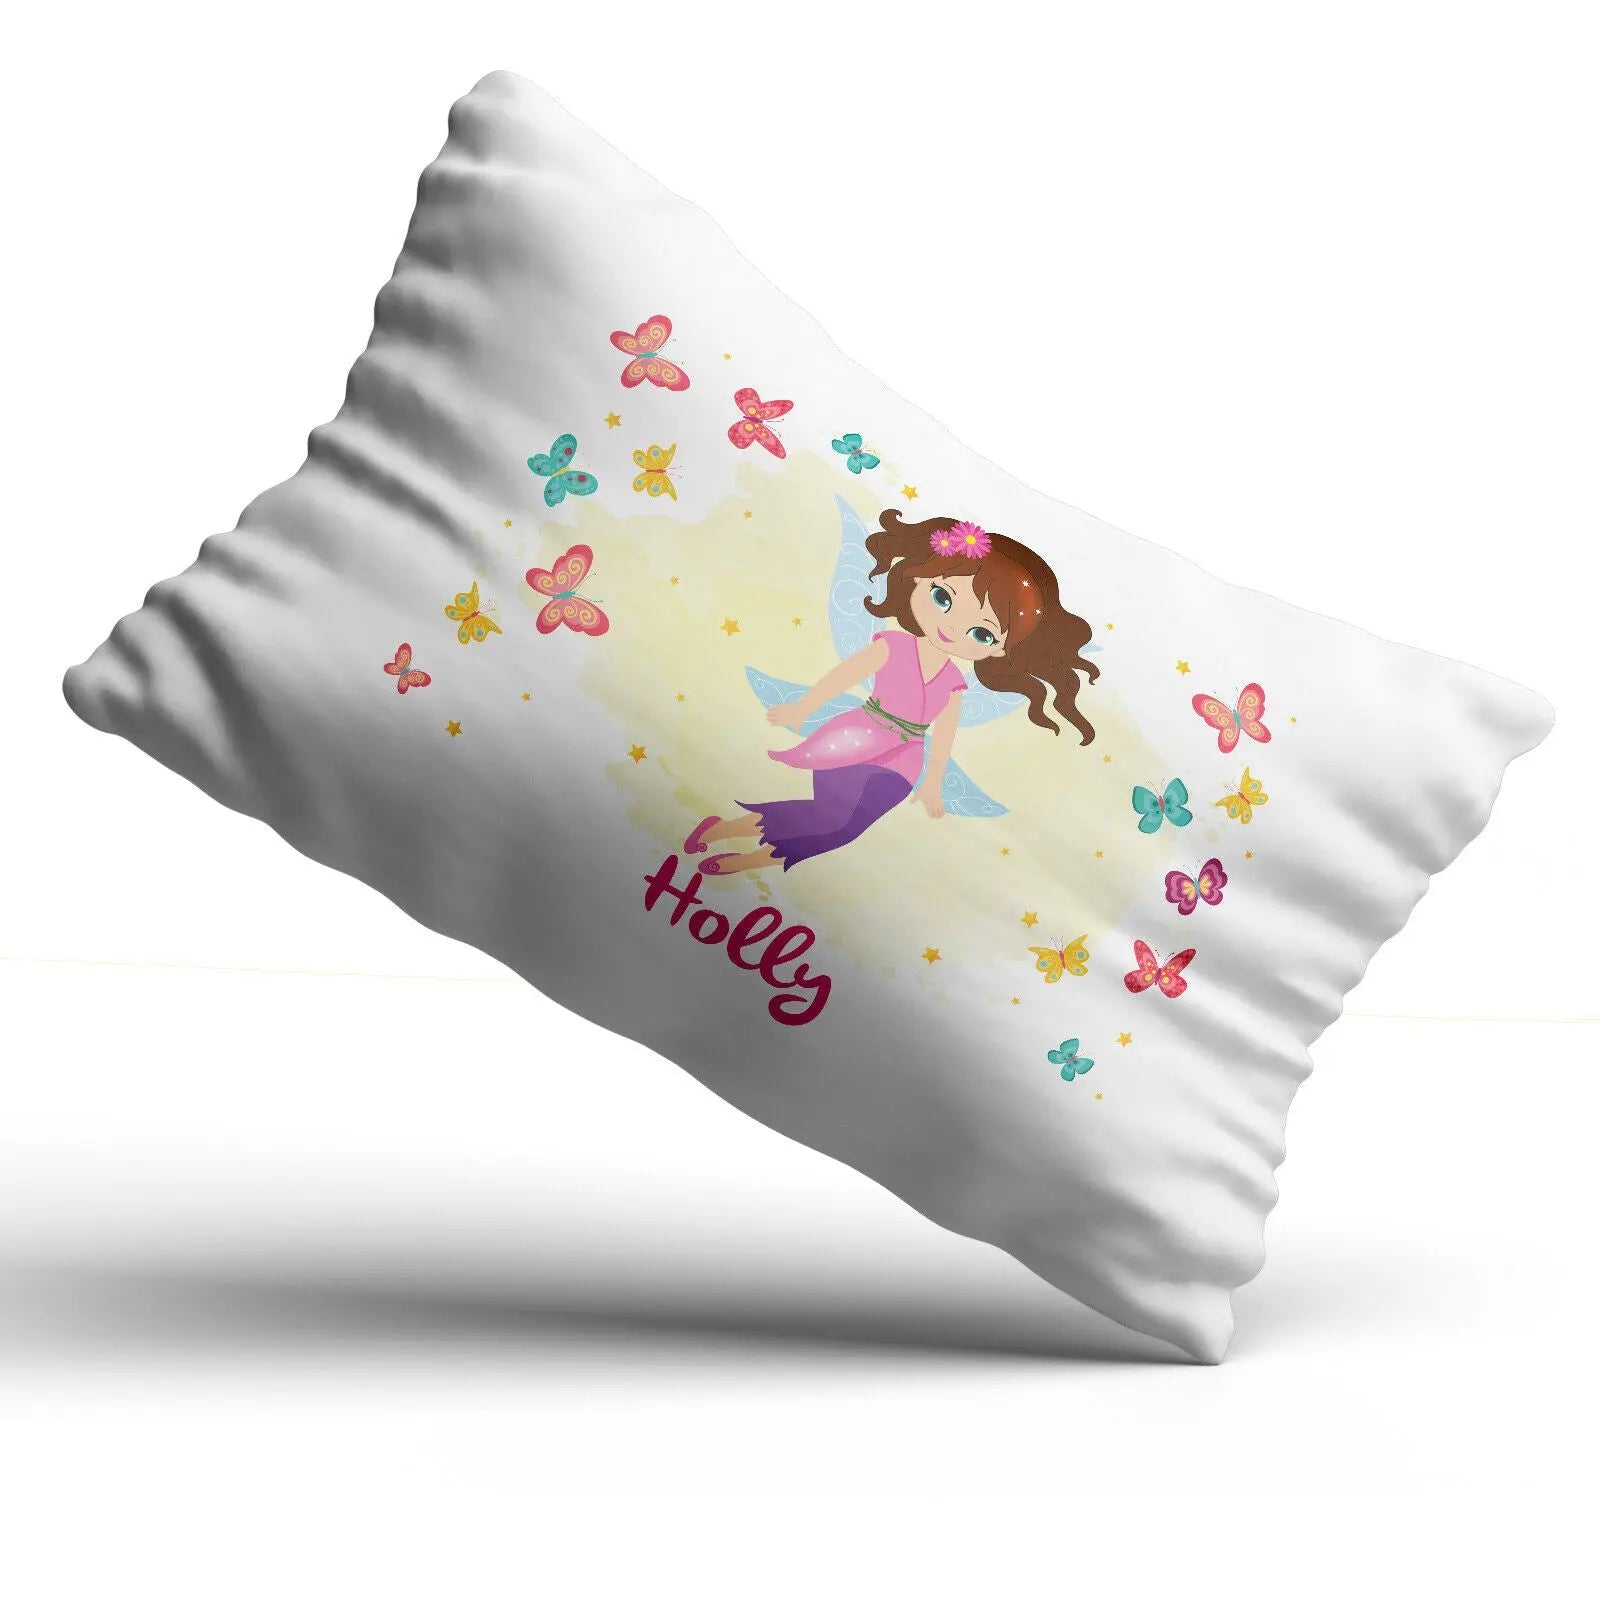 Personalised Fairy Pillowcase Children Printed Gift Custom Print Made - Cheeky - CushionPop